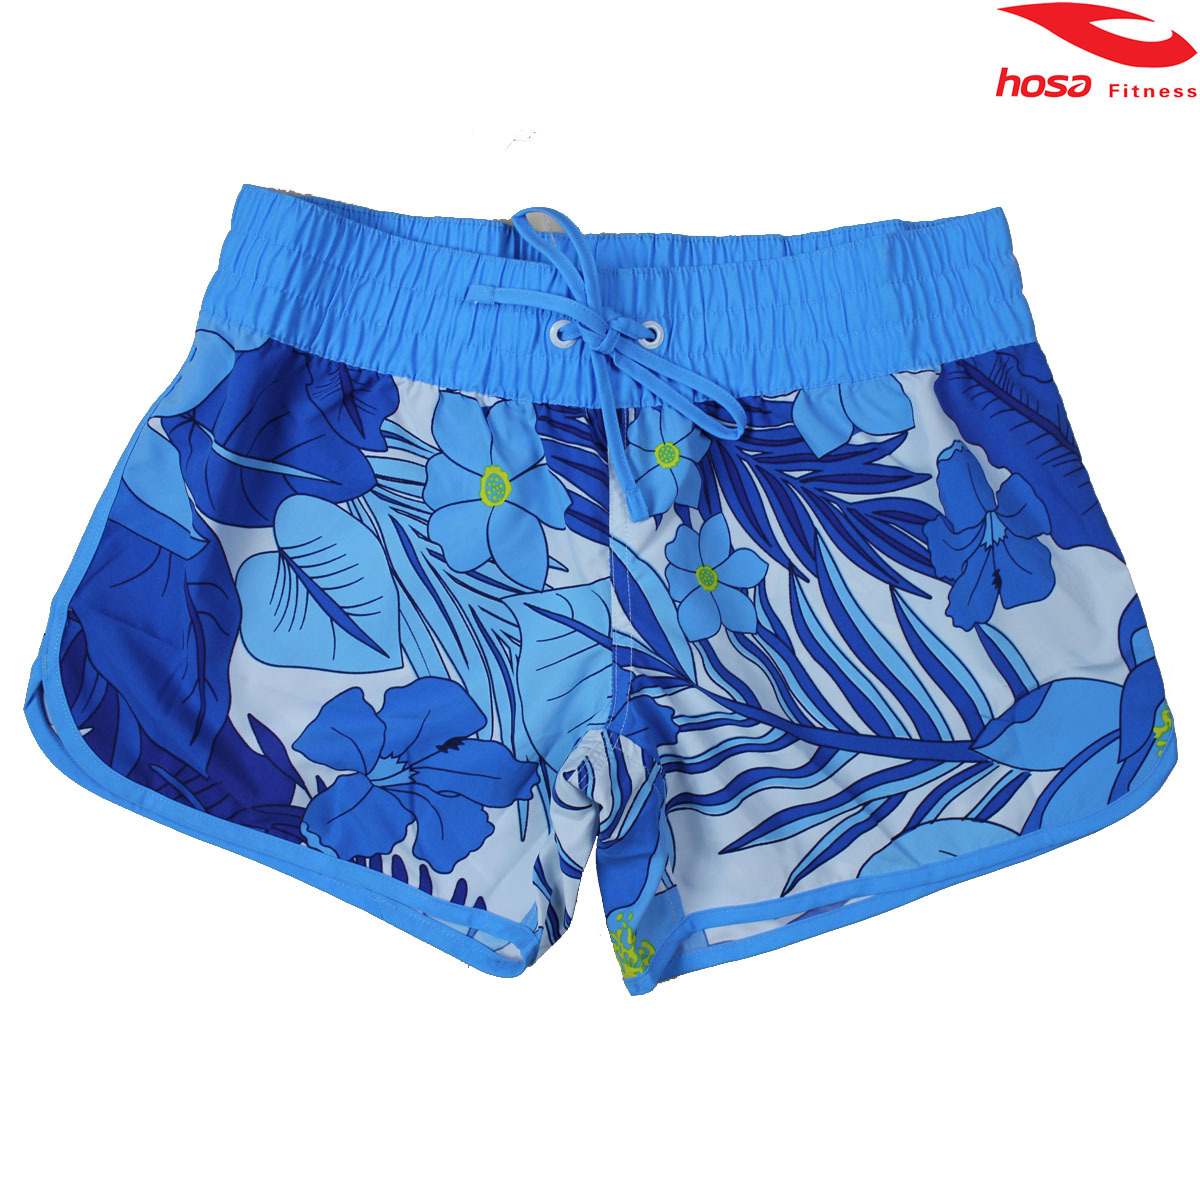 Swimming trunks women's beach pants 112221203 swimming pants